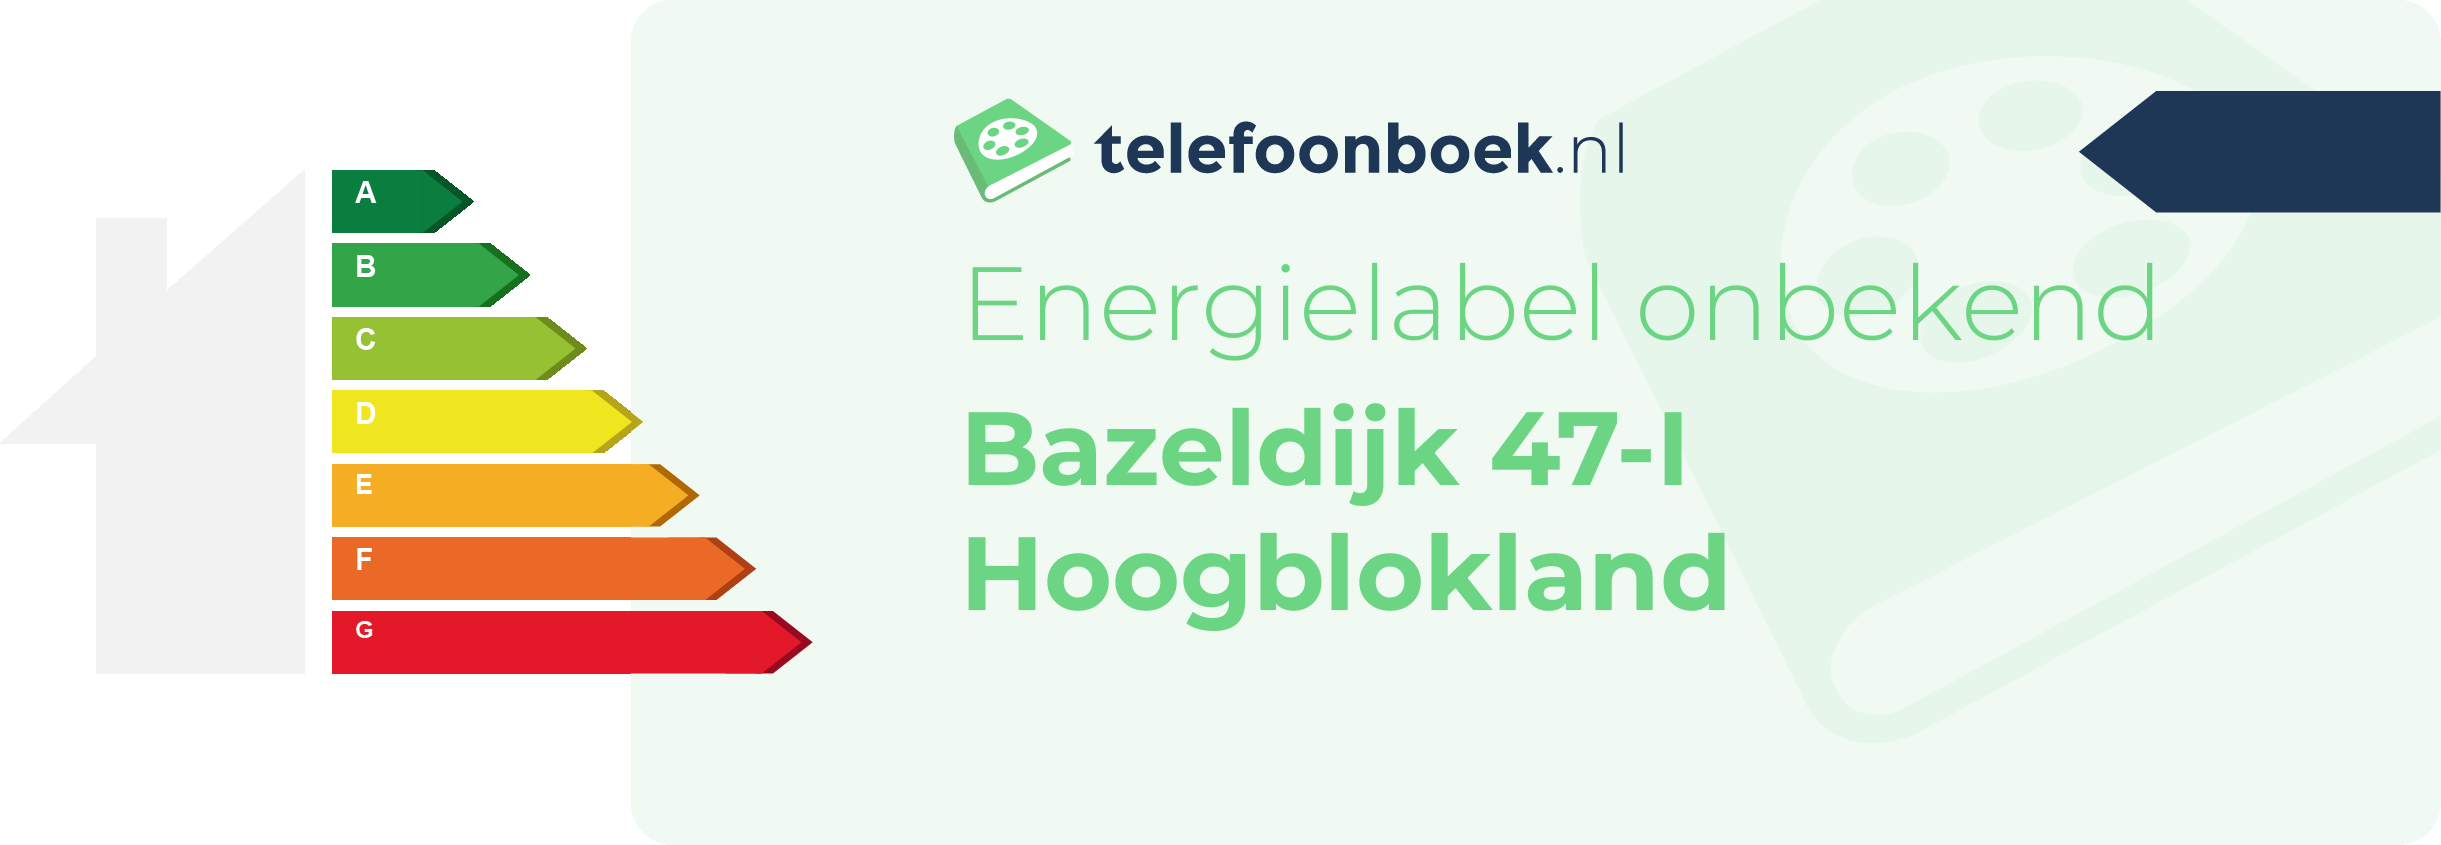 Energielabel Bazeldijk 47-I Hoogblokland